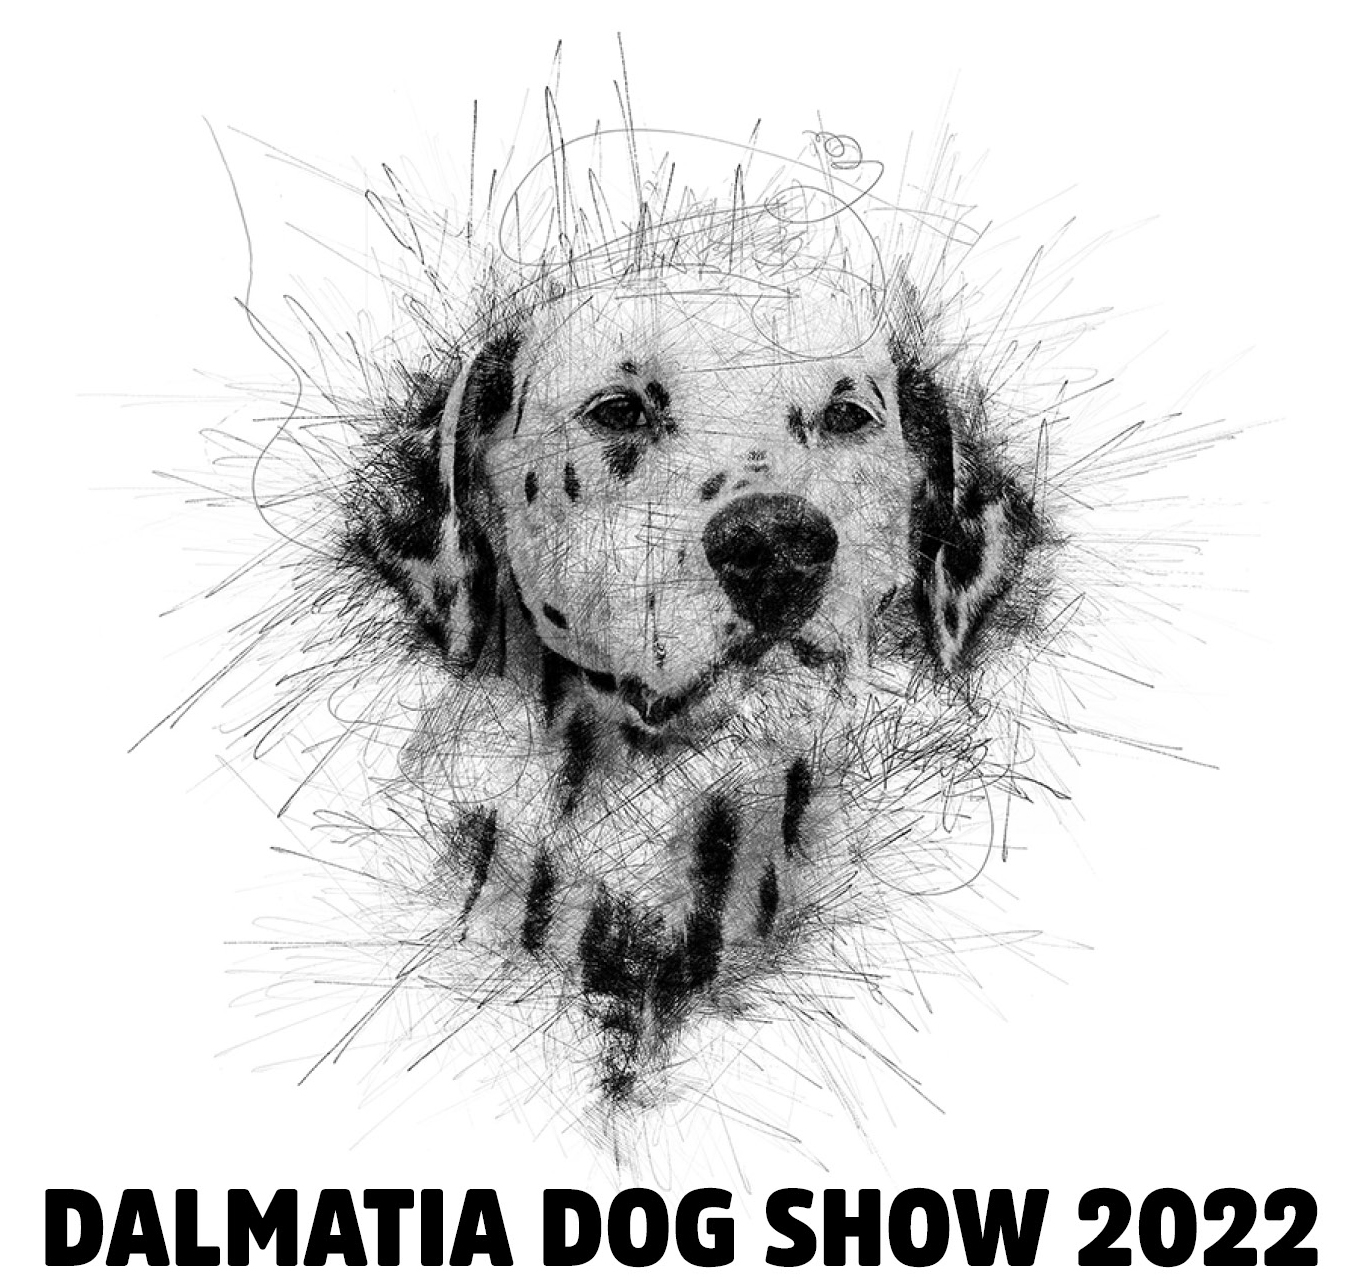 DALMATIA DOG SHOWS 2022